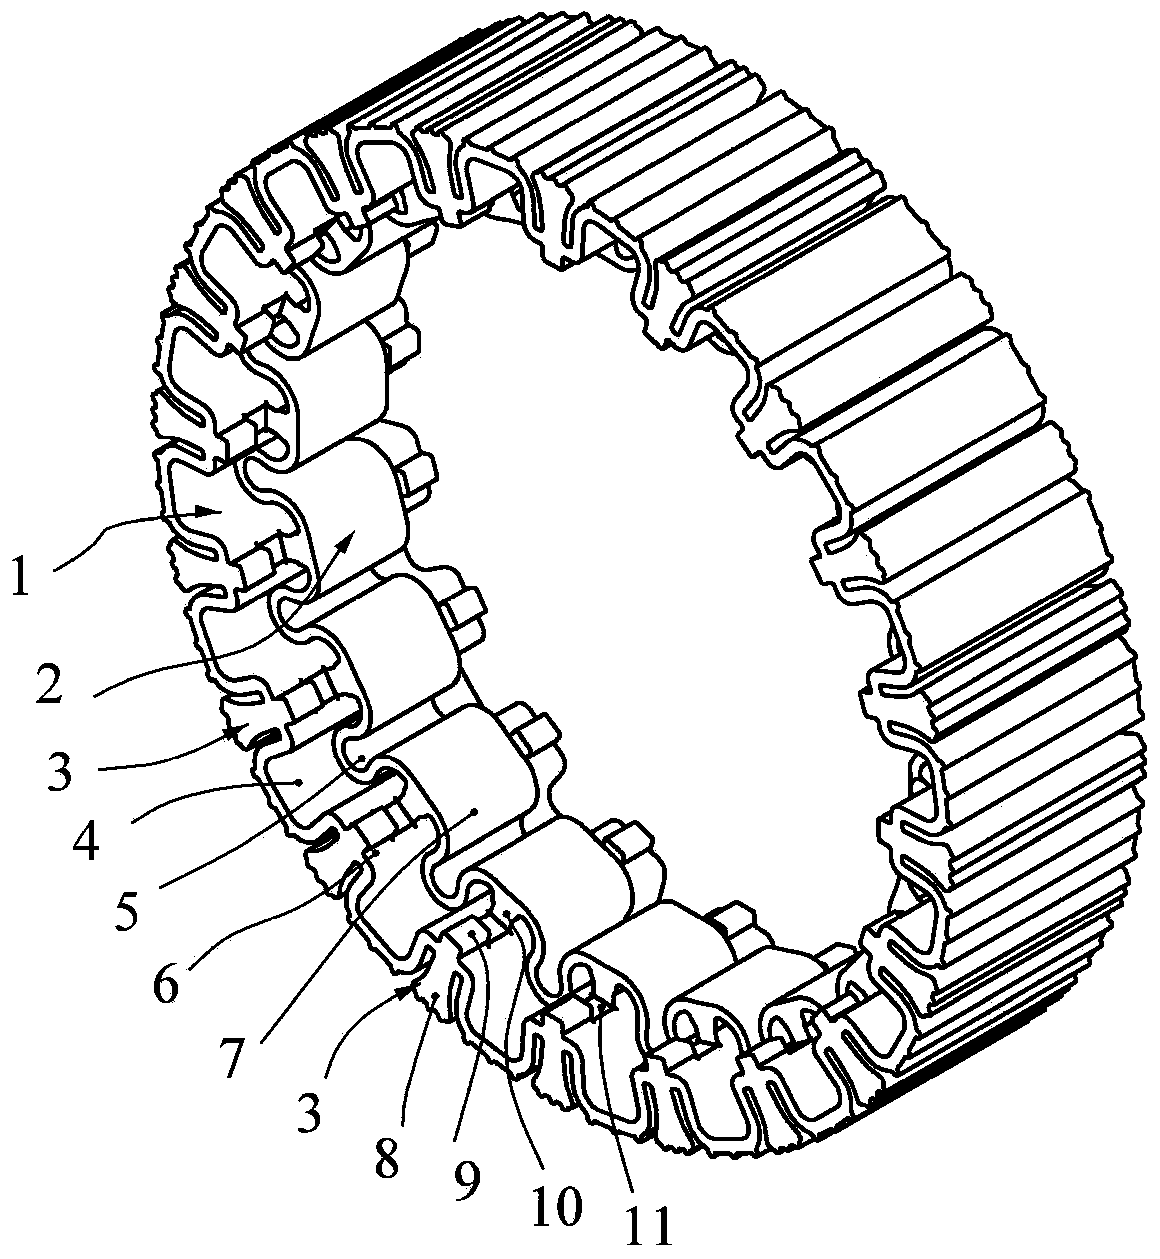 Elastic caterpillar band capable of realizing telescopic deformation